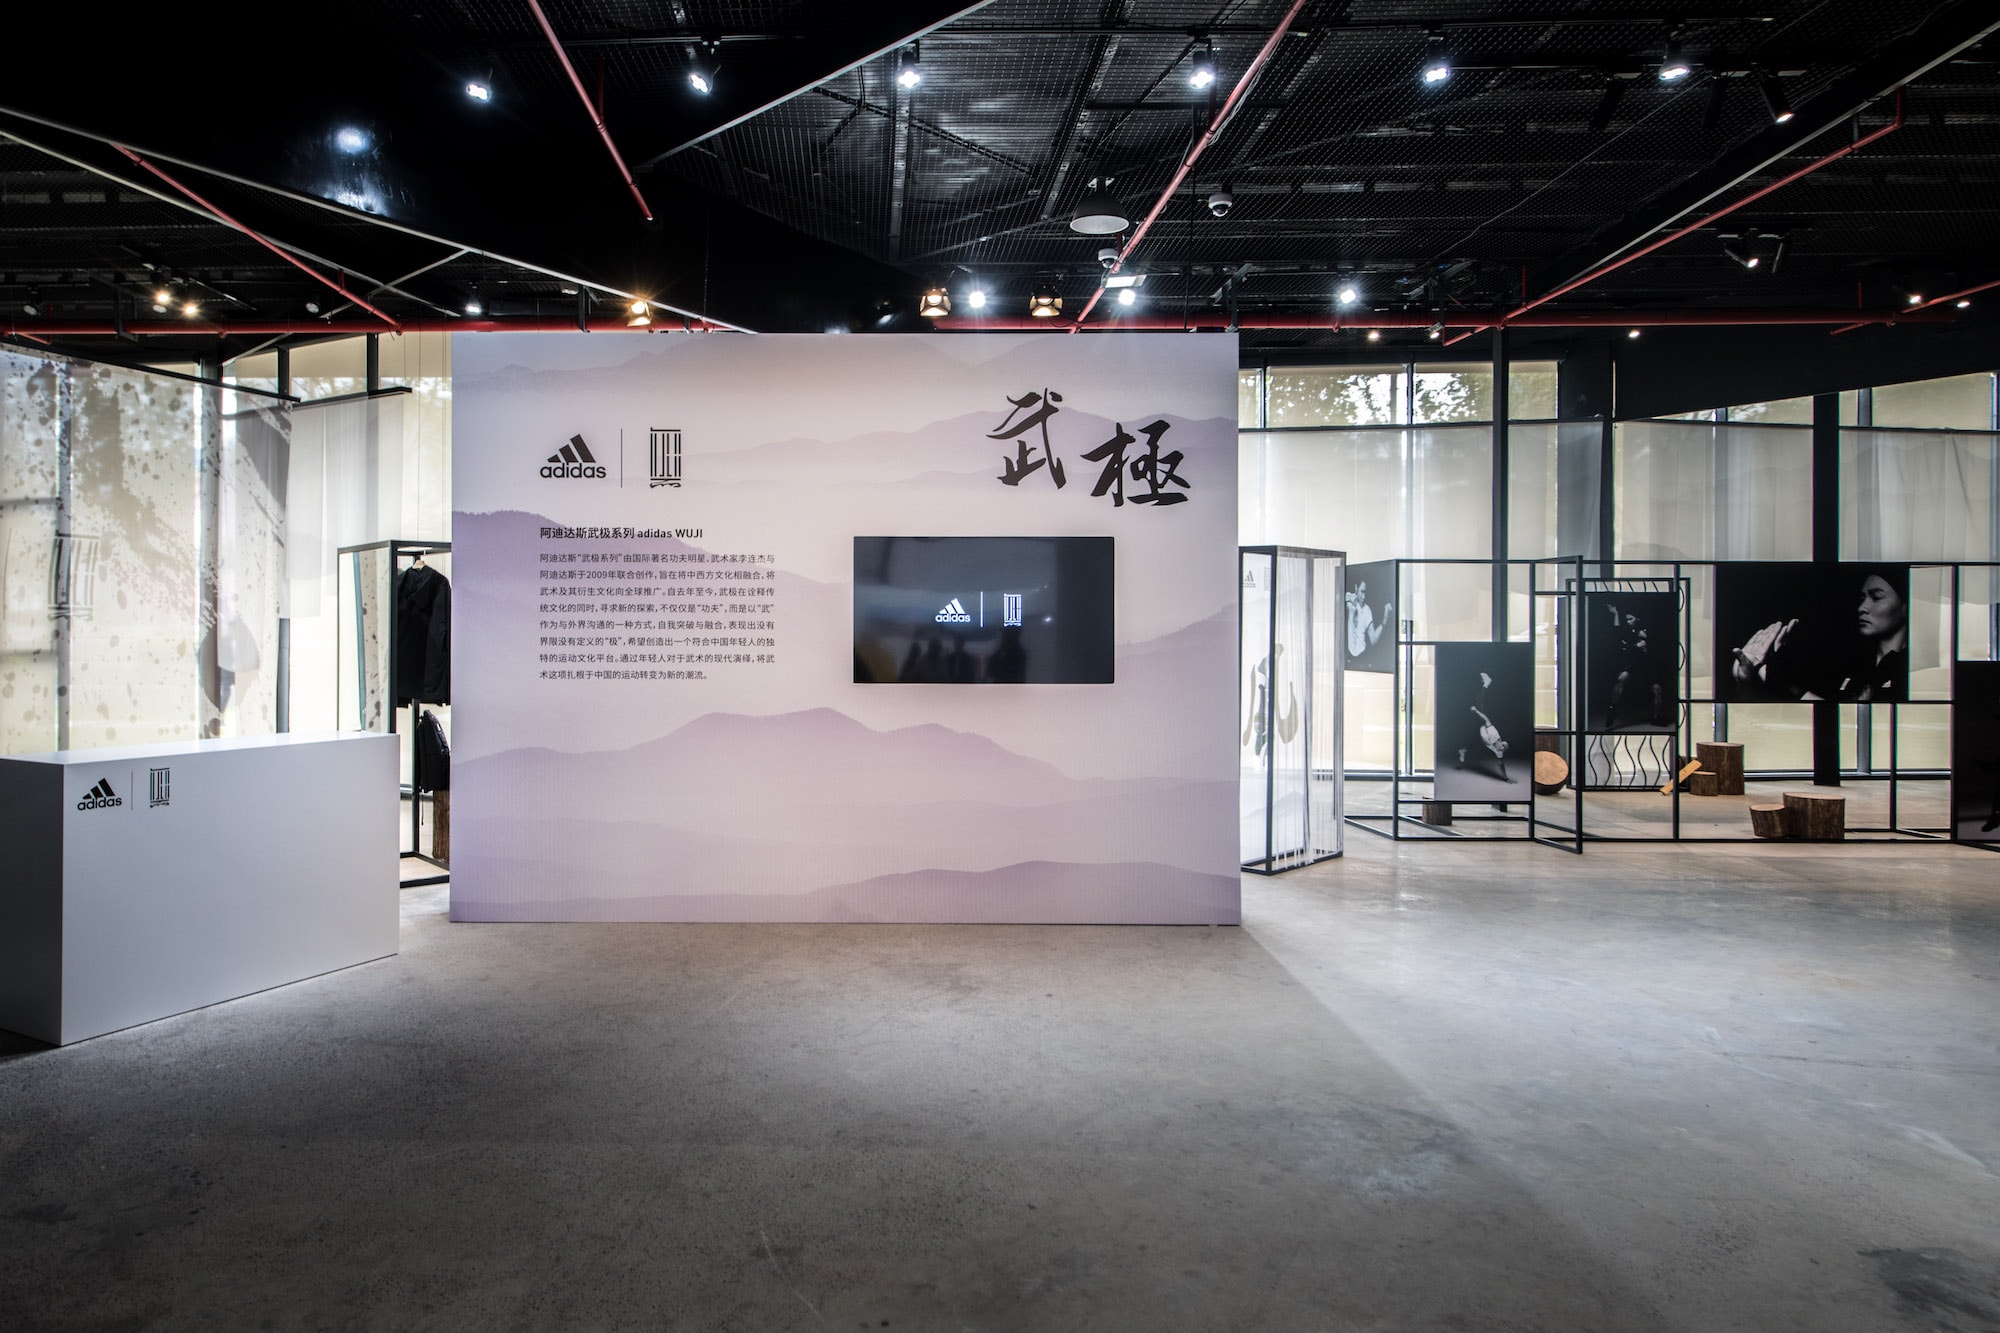 adidas 於上海舉辦「武 由我定義」主題時尚影像展